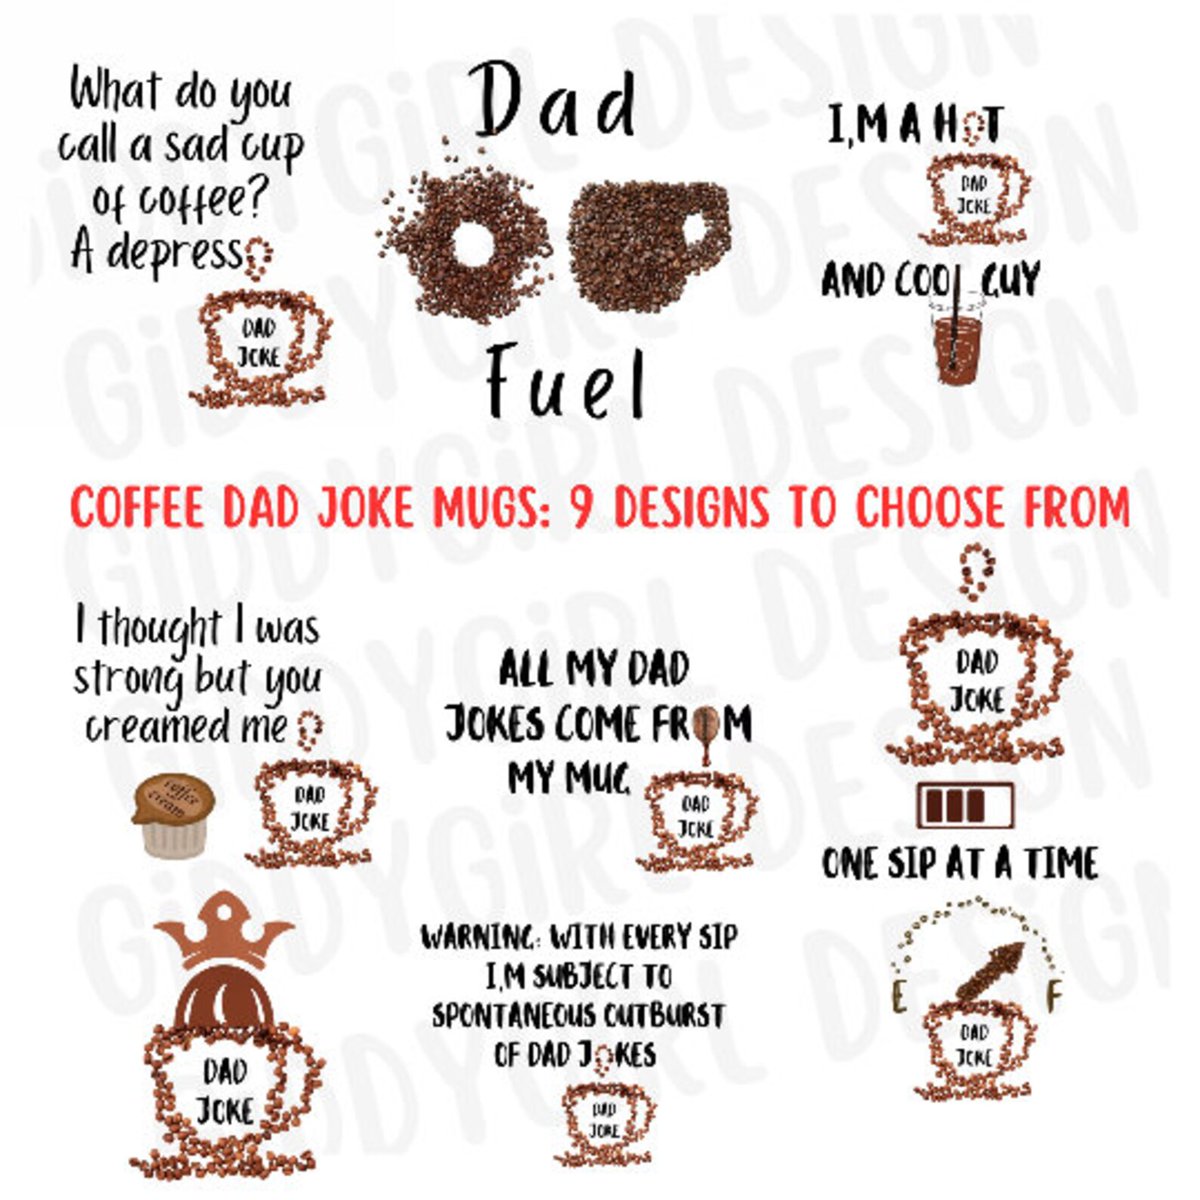 Check out these and other designs at coffeeinkandbooks.etsy.com

#dadjoke
#dadjokes
#coffeemug
#funnycoffeemug
#tshirt
#etsy
#divinelydesigned
#coffeebeanfaith
#coffee